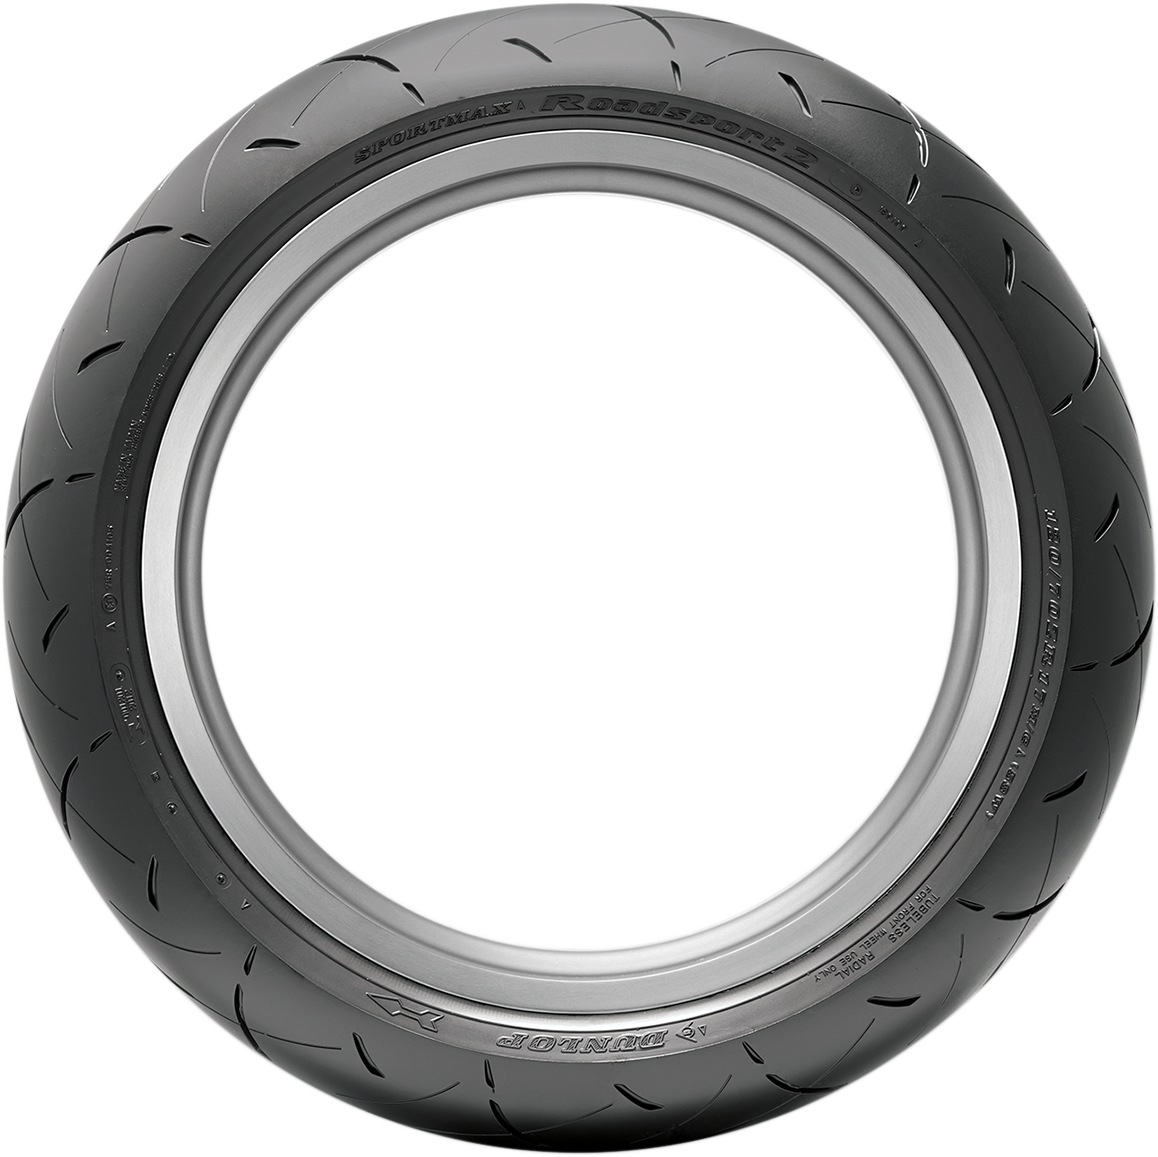 DUNLOP Tire - Roadsport 2 - Front - 120/70ZR17 - (58W) 45238704